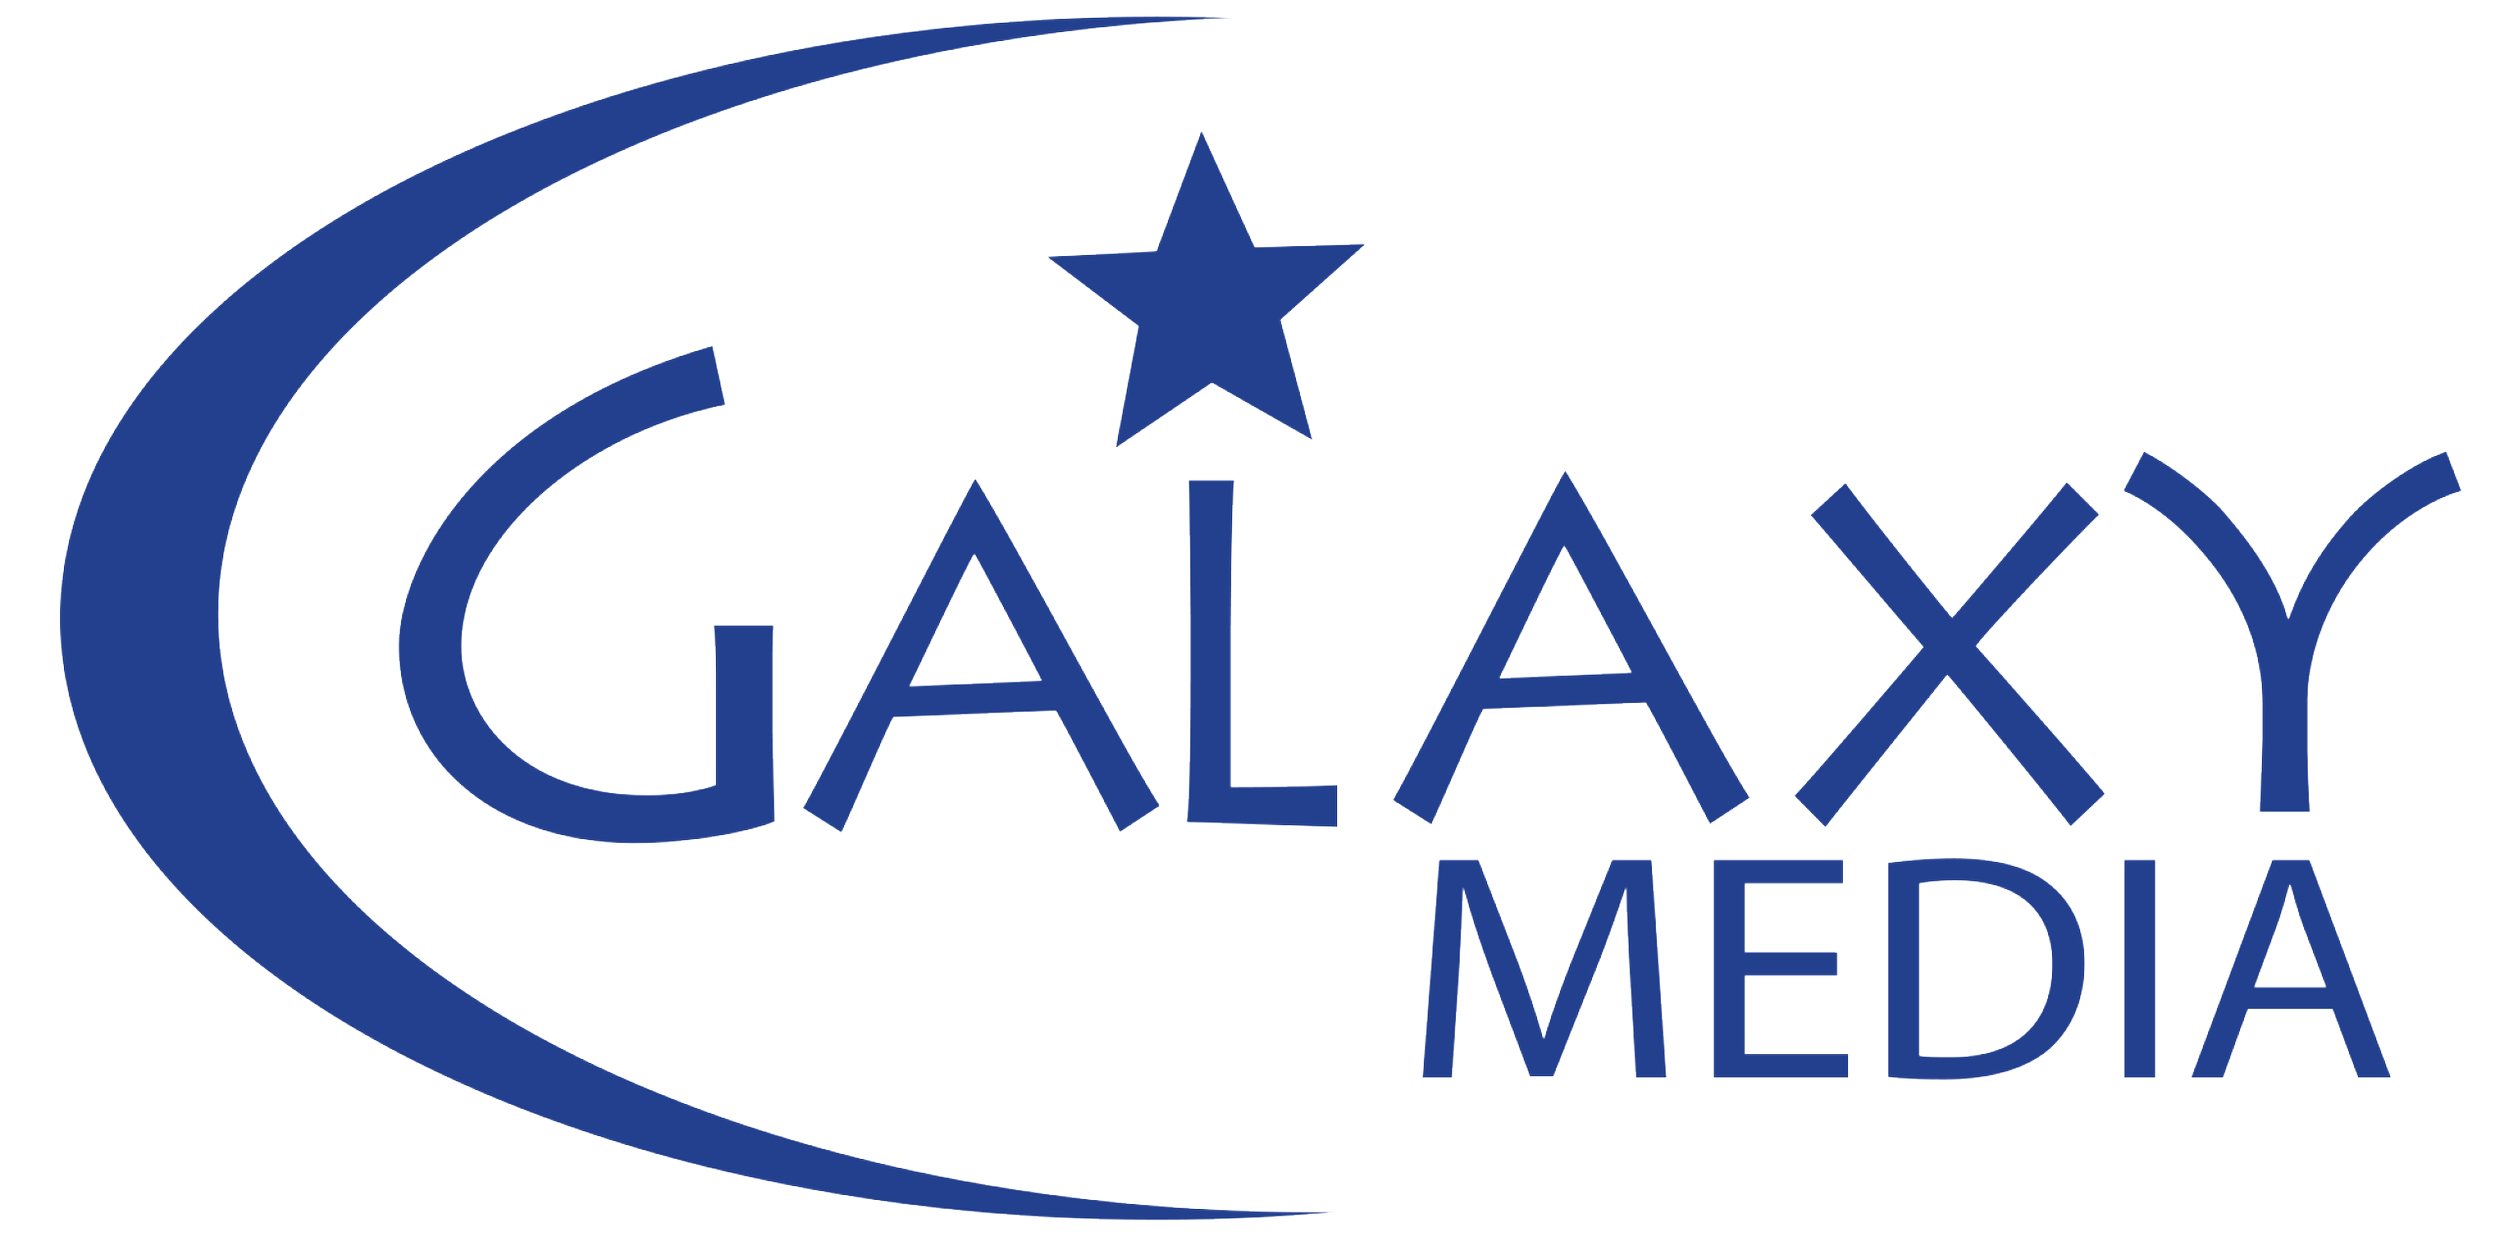 1 - Galaxy Media.png